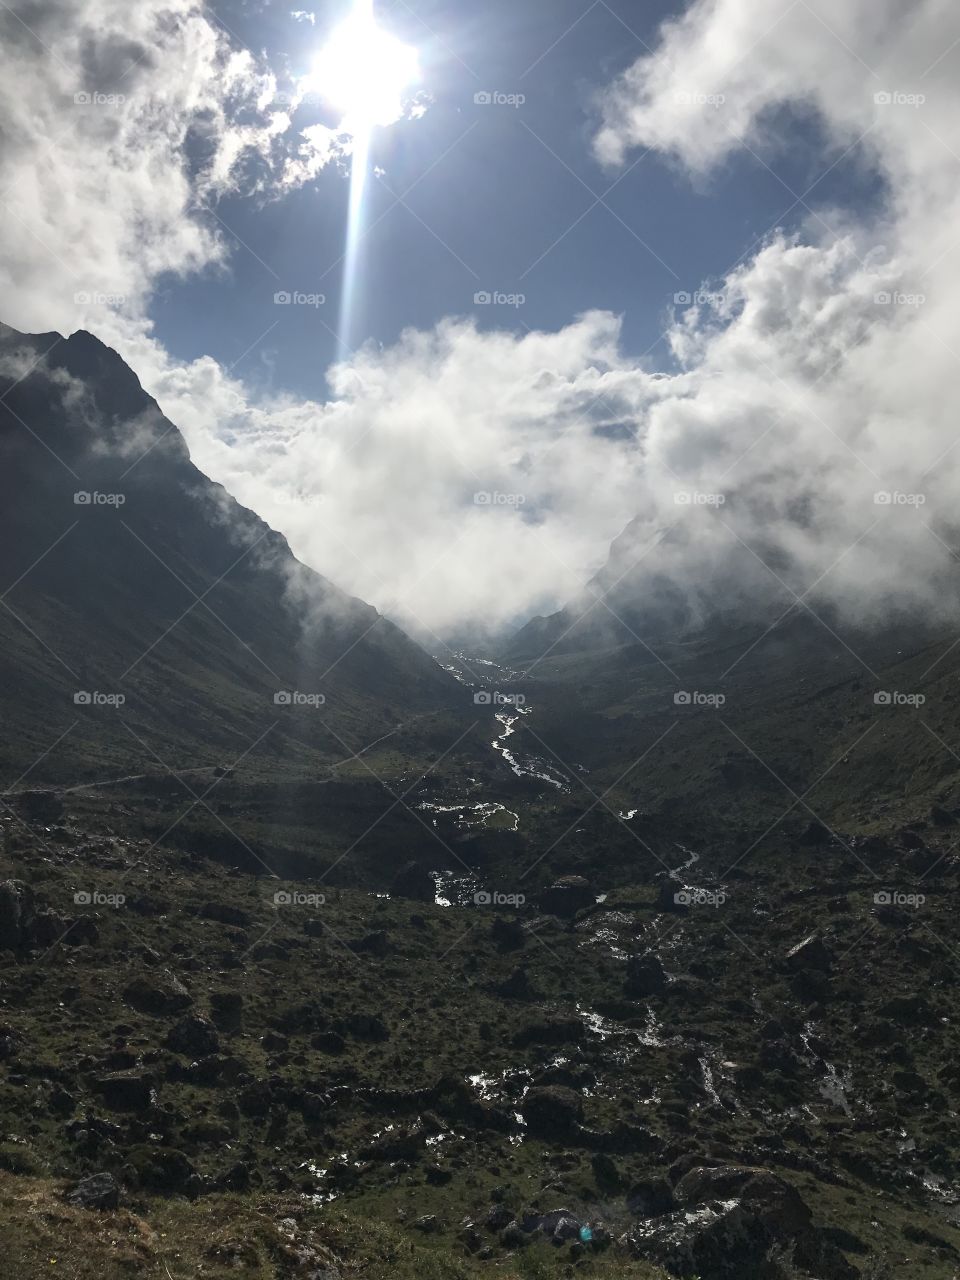 Views from Peru